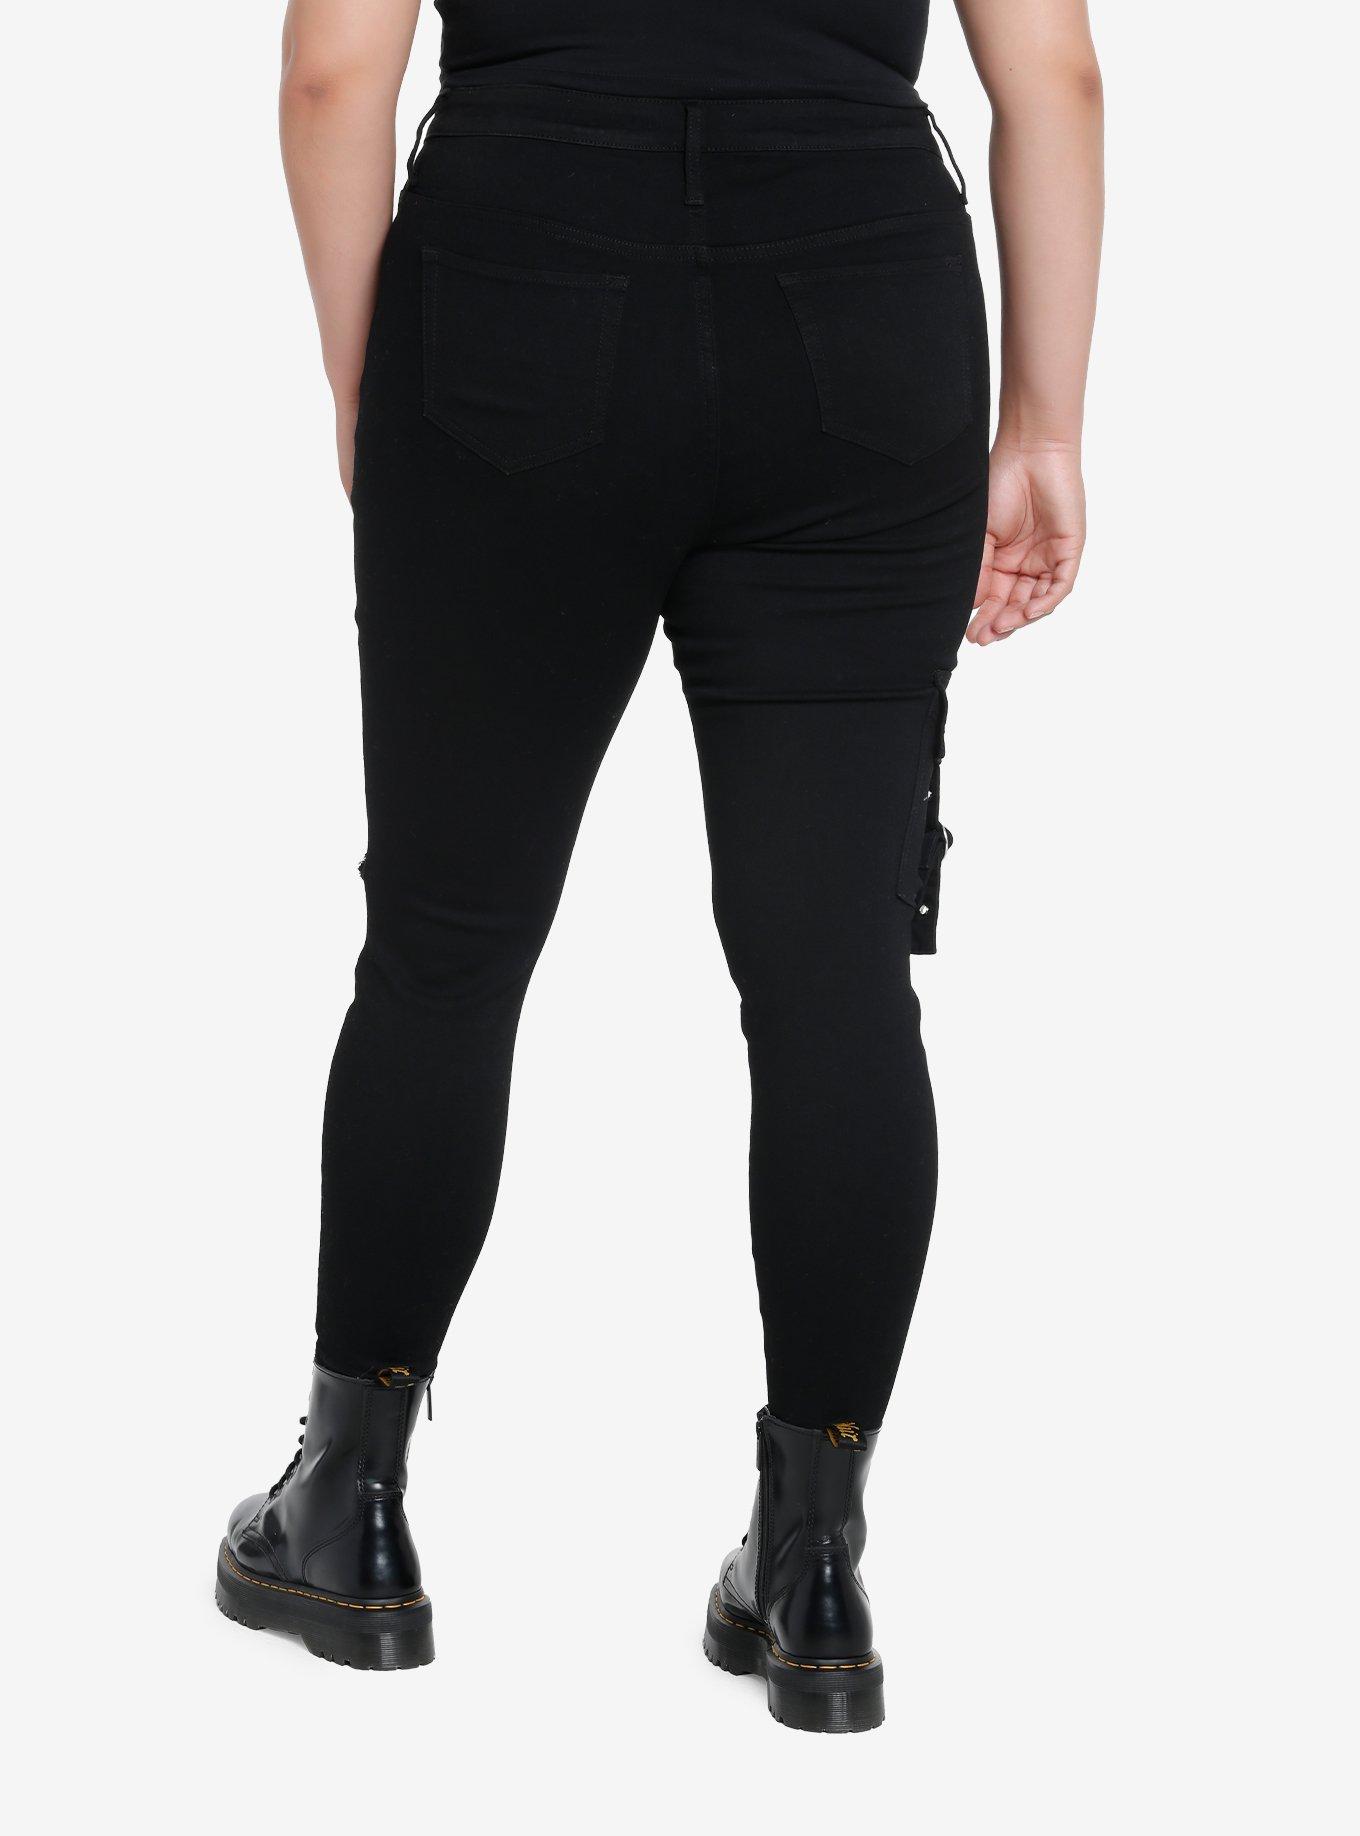 Black Buckle Grommet Low Rise Flare Pants Plus Size, Hot Topic